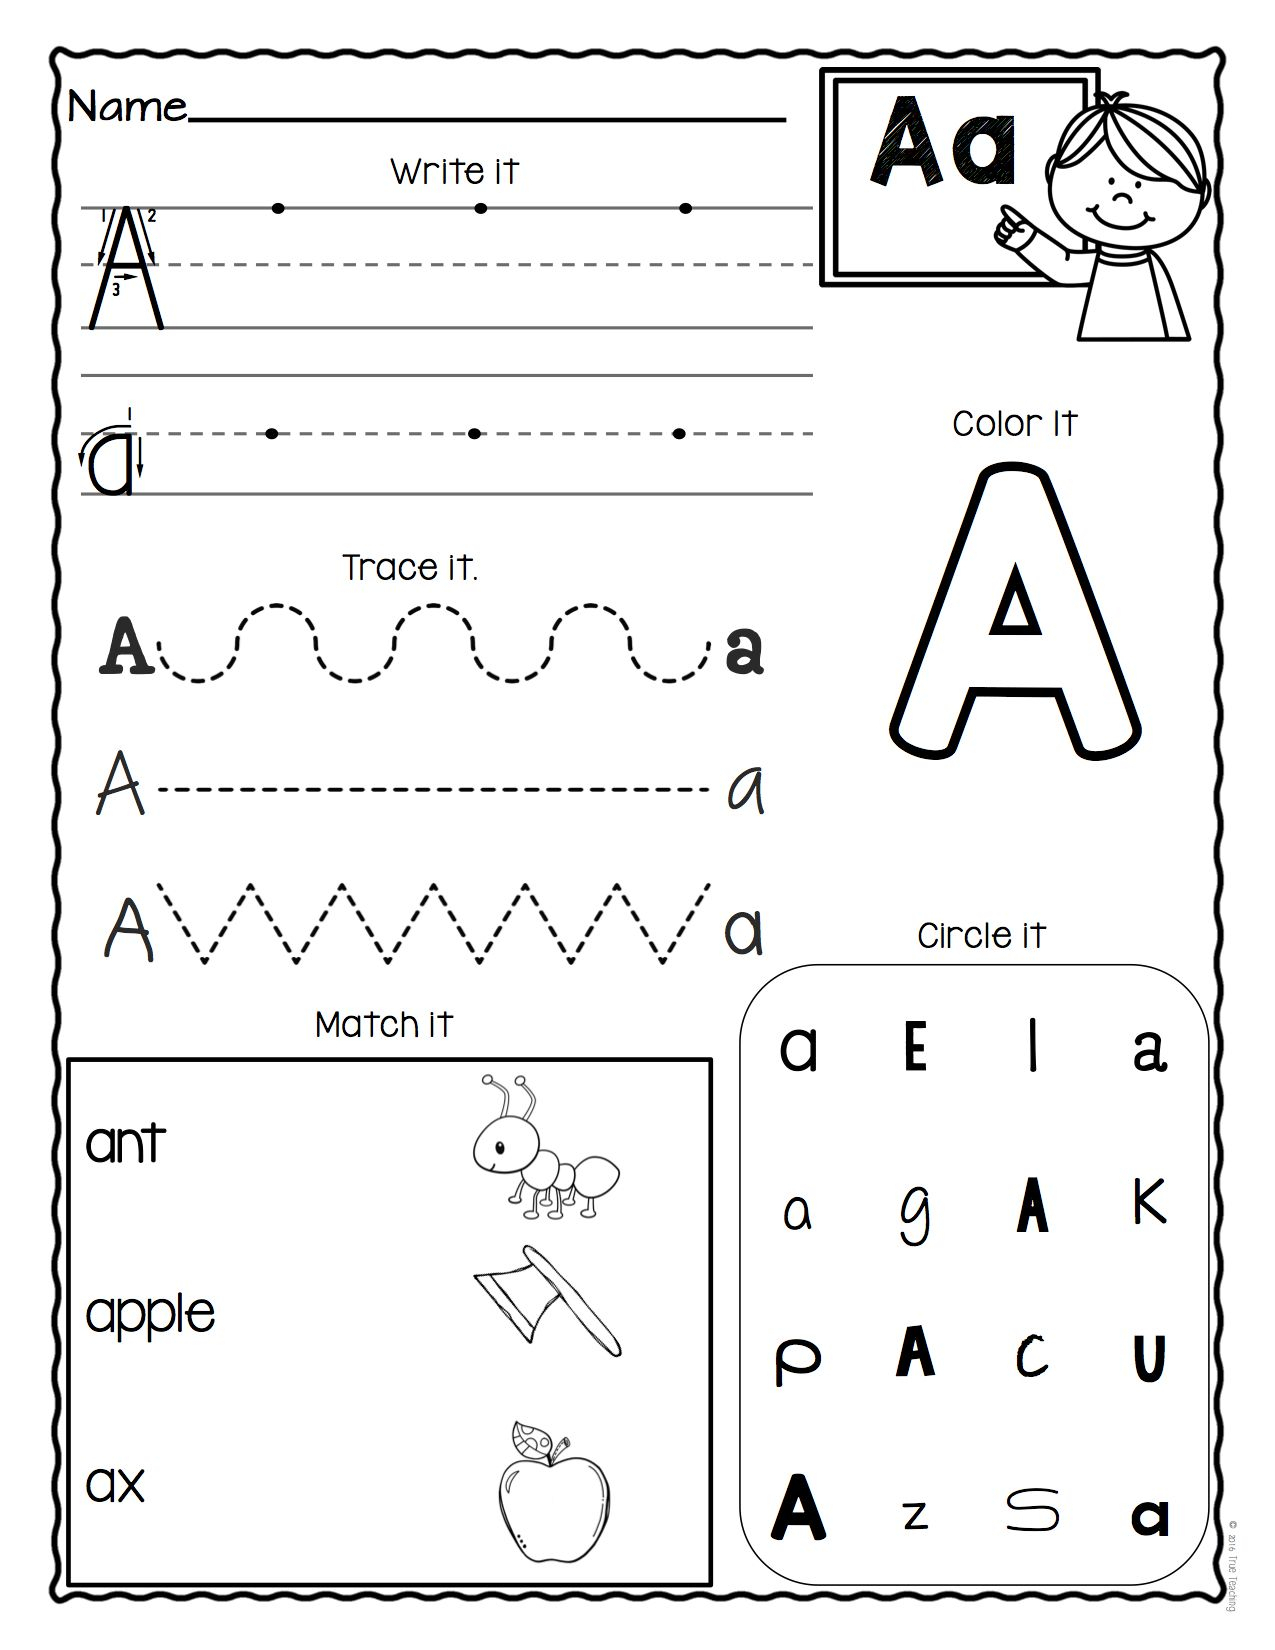 Alphabet Worksheets Pre K AlphabetWorksheetsFree com